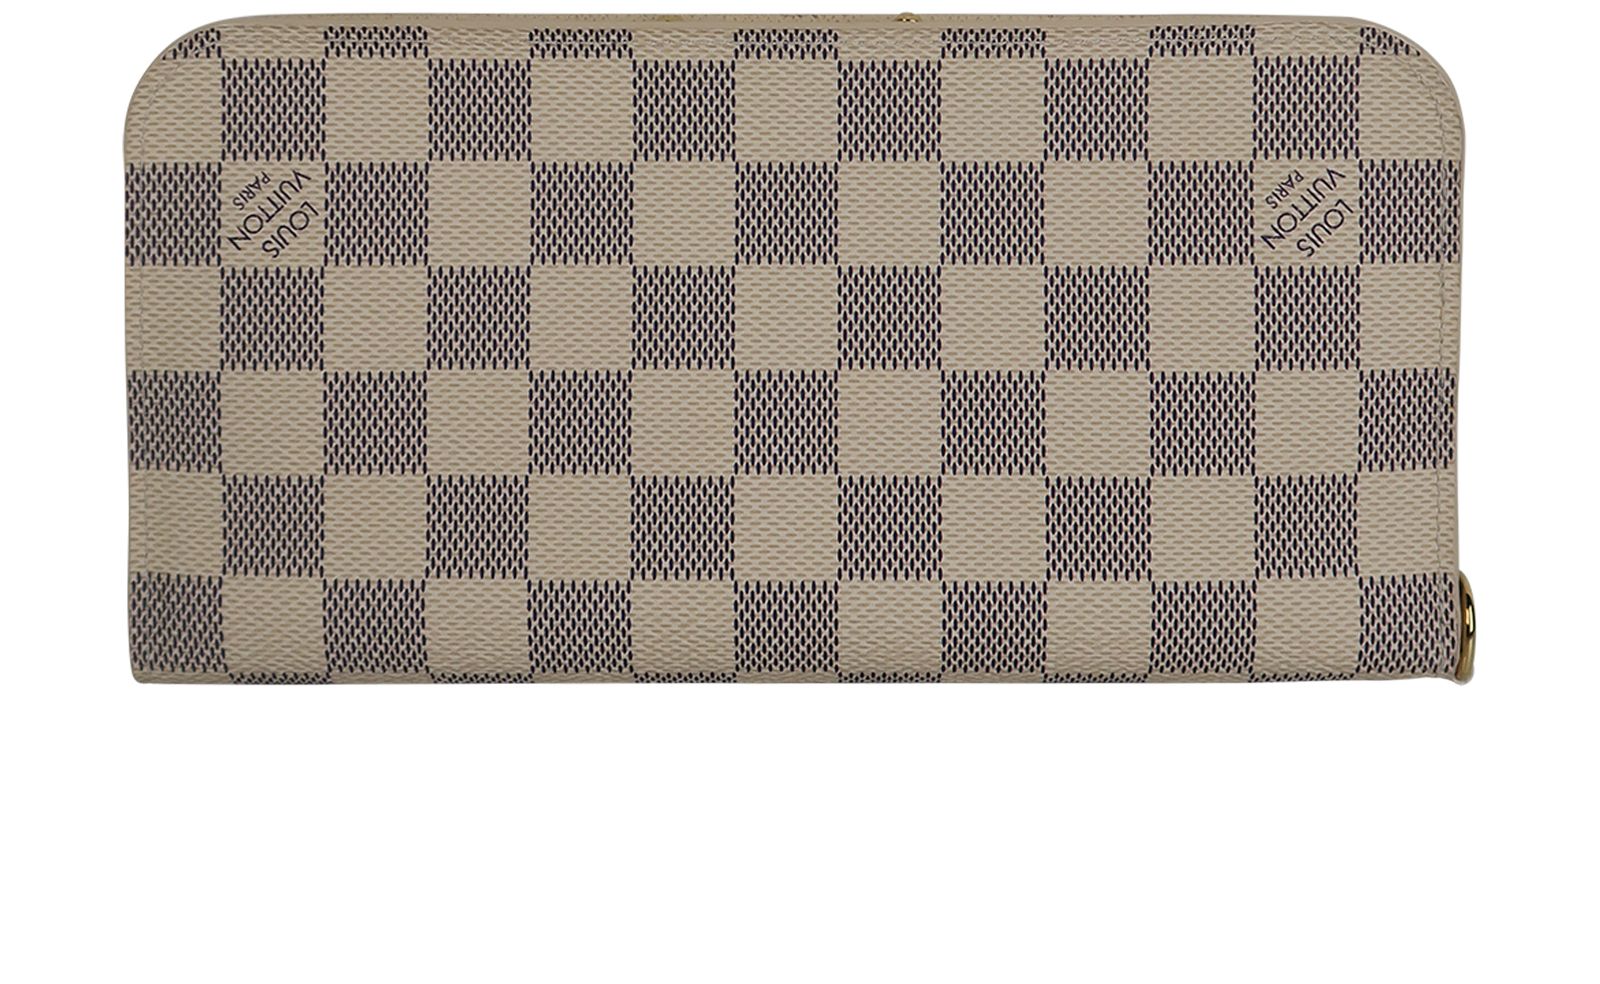 Authentic Louis Vuitton Monogram Insolite Wallet $595 Obo for Sale